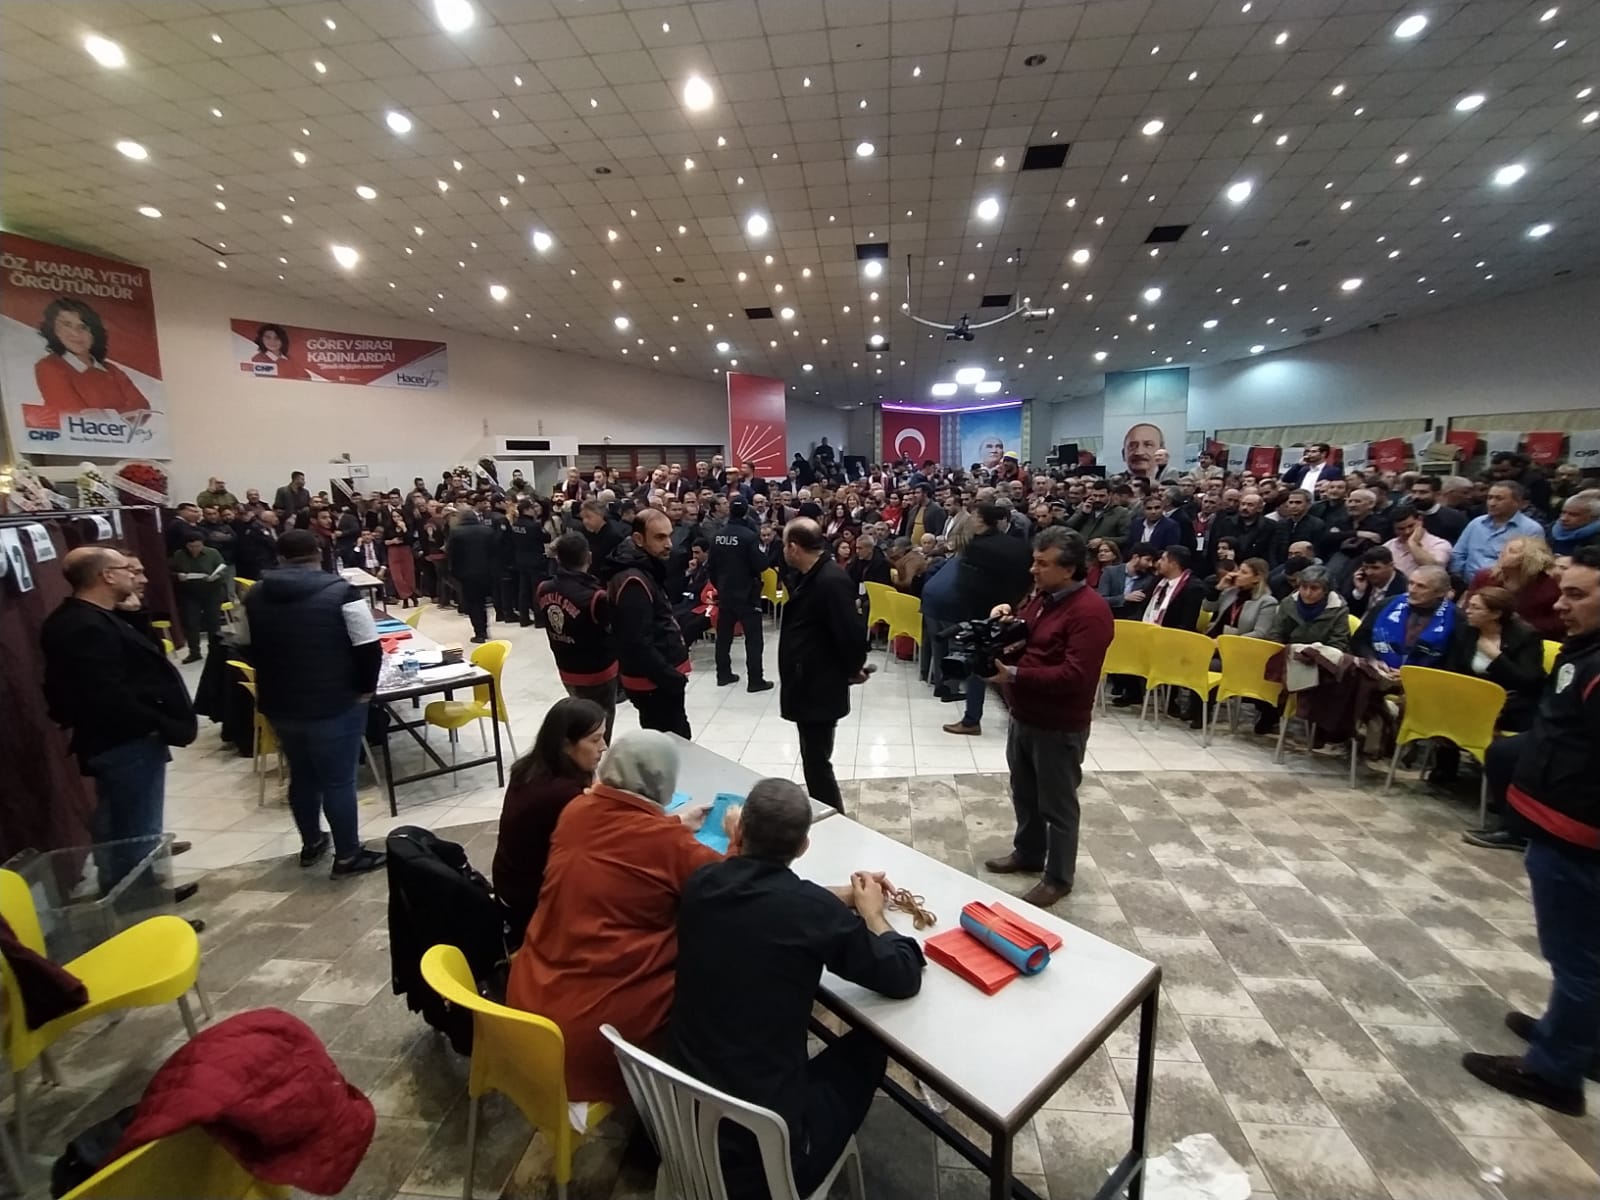 CHP Buca'da kongre heyecanı